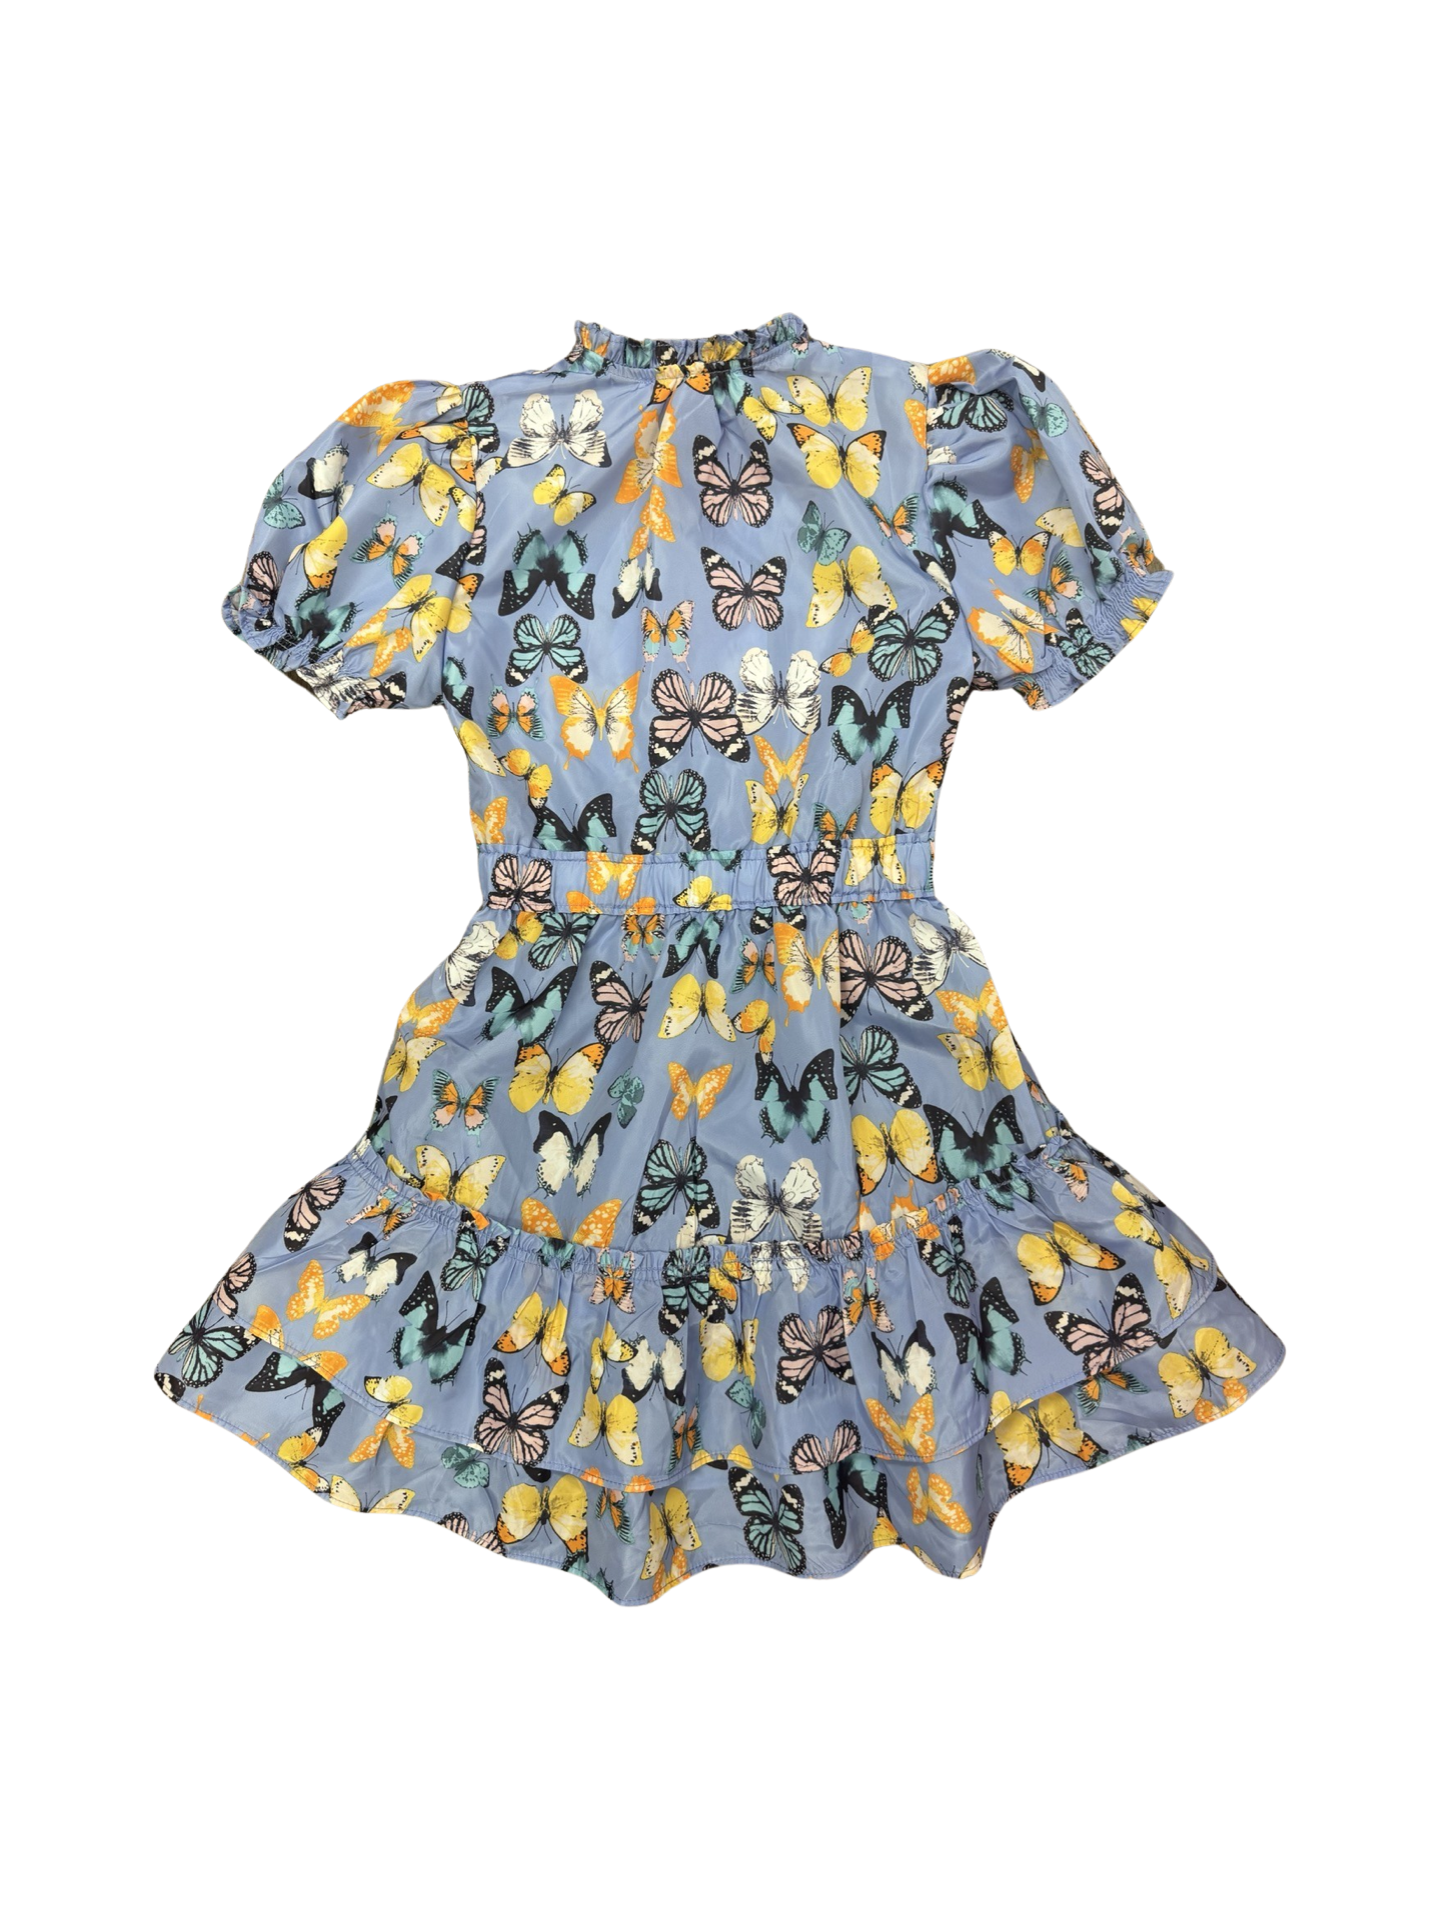 Girls- Buddy Love Tween Clementine Elastic Waist Mini Dress